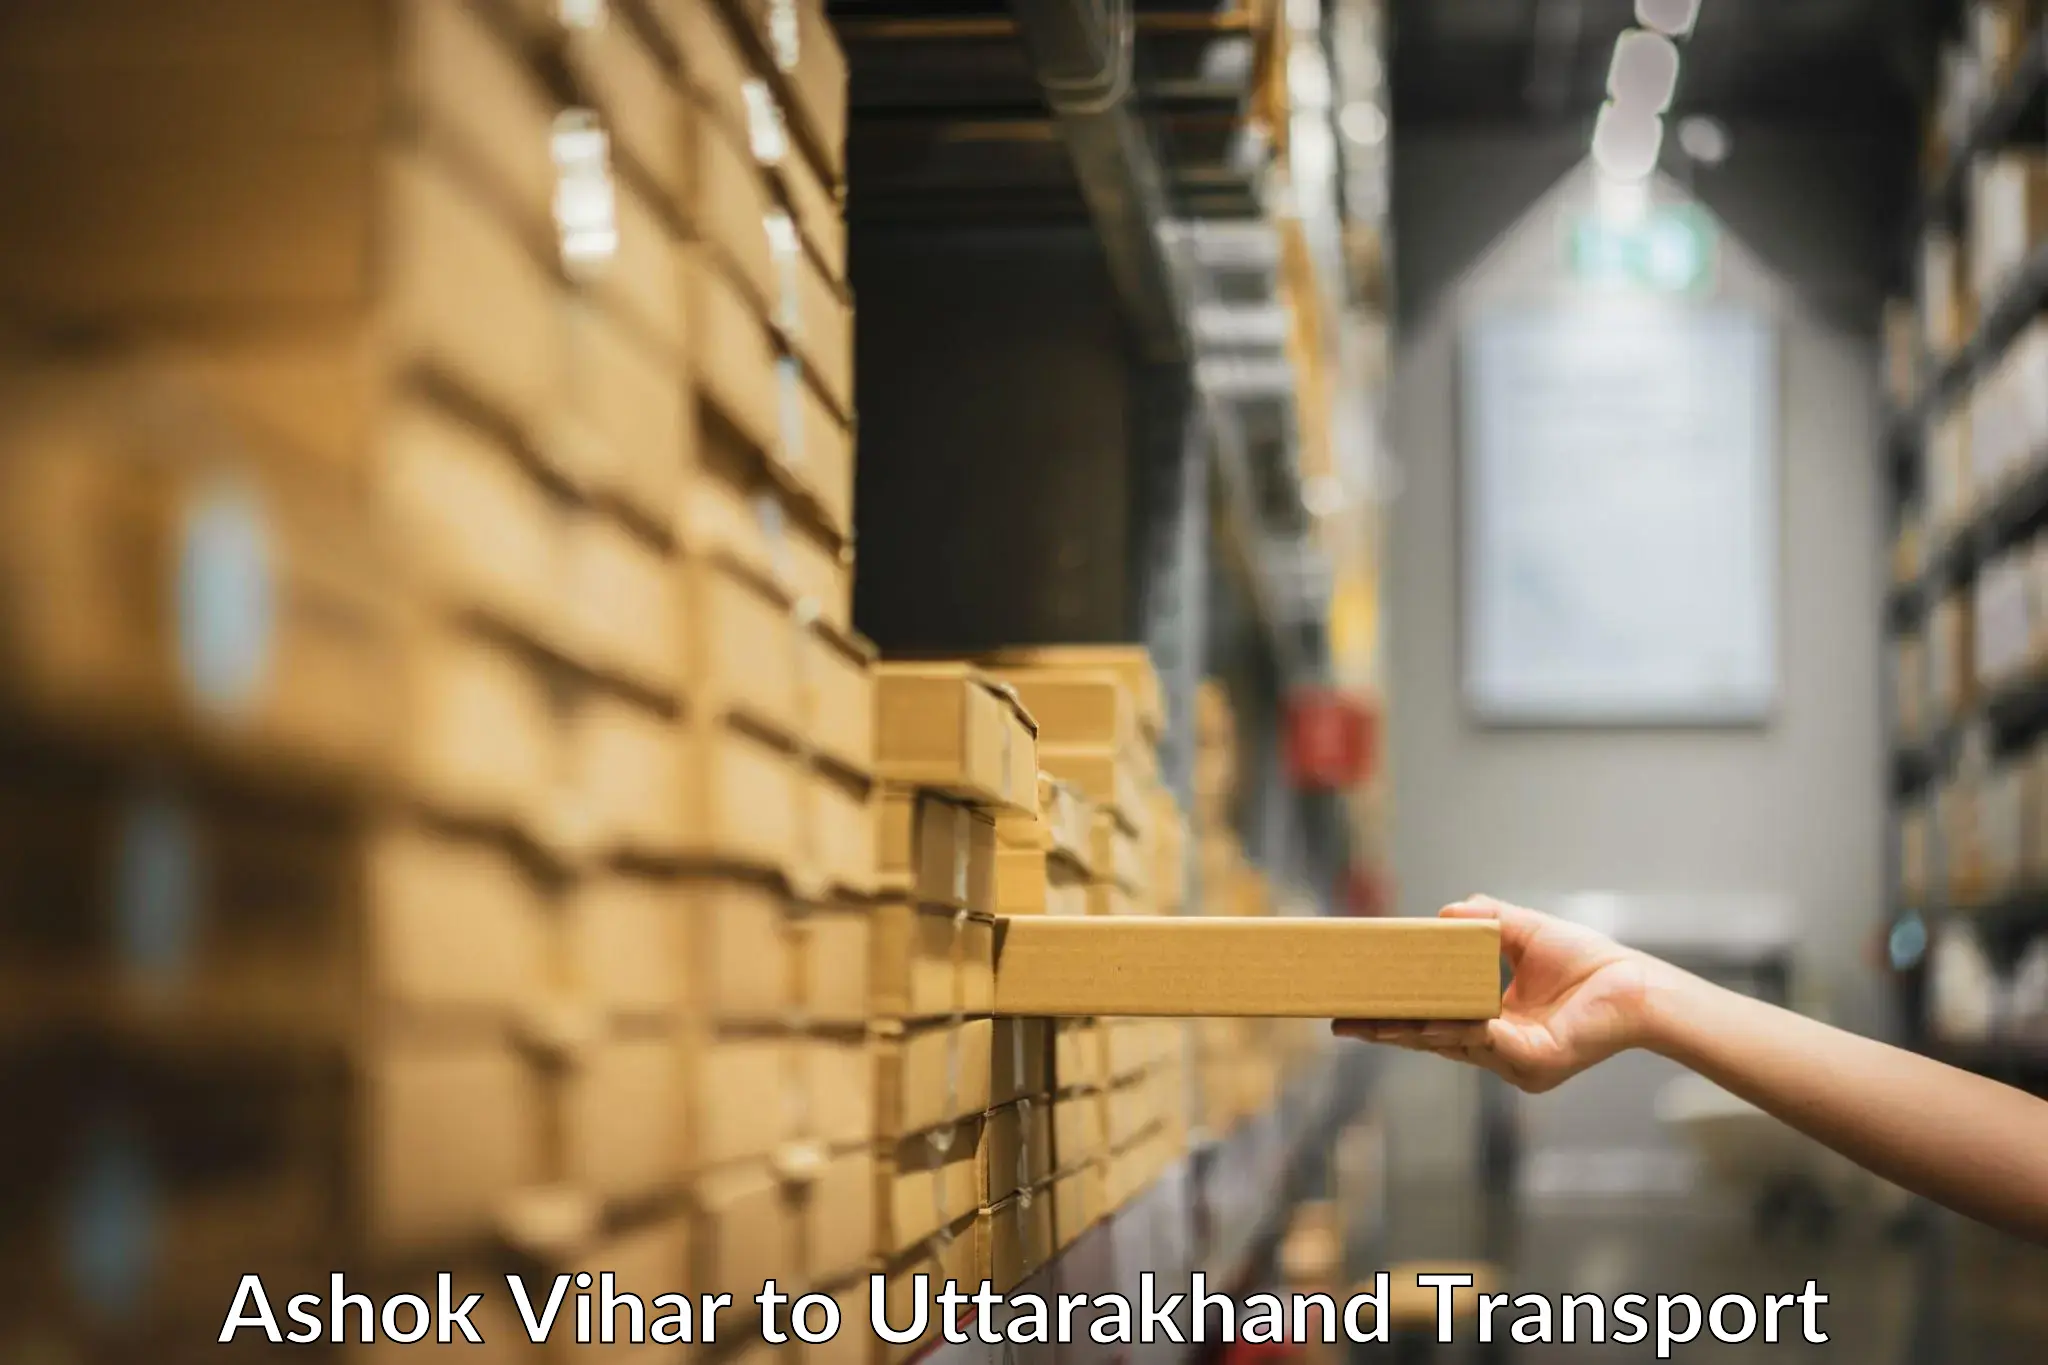 Truck transport companies in India Ashok Vihar to Rudrapur